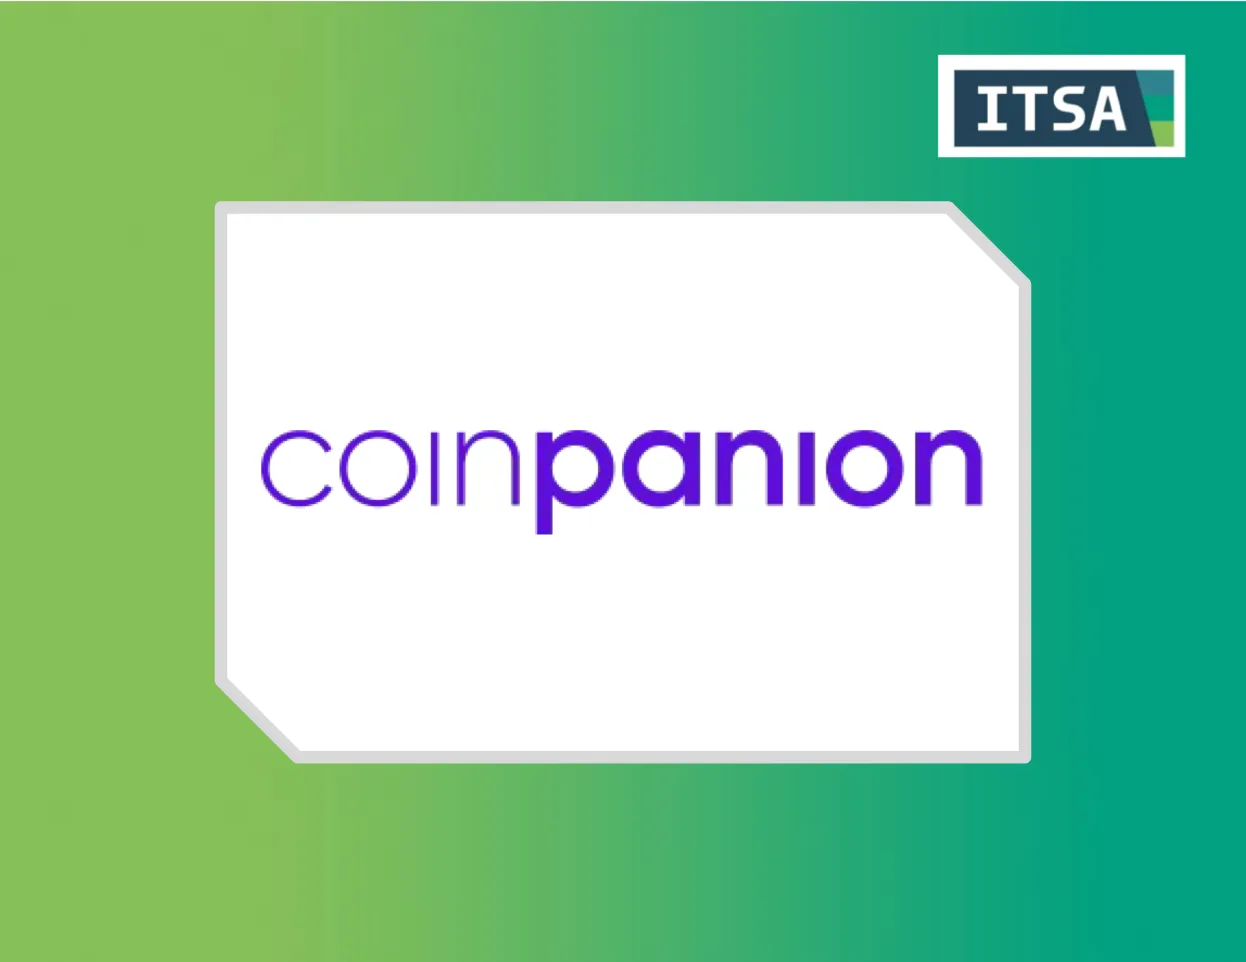 Coinpanion and ITSA Solution